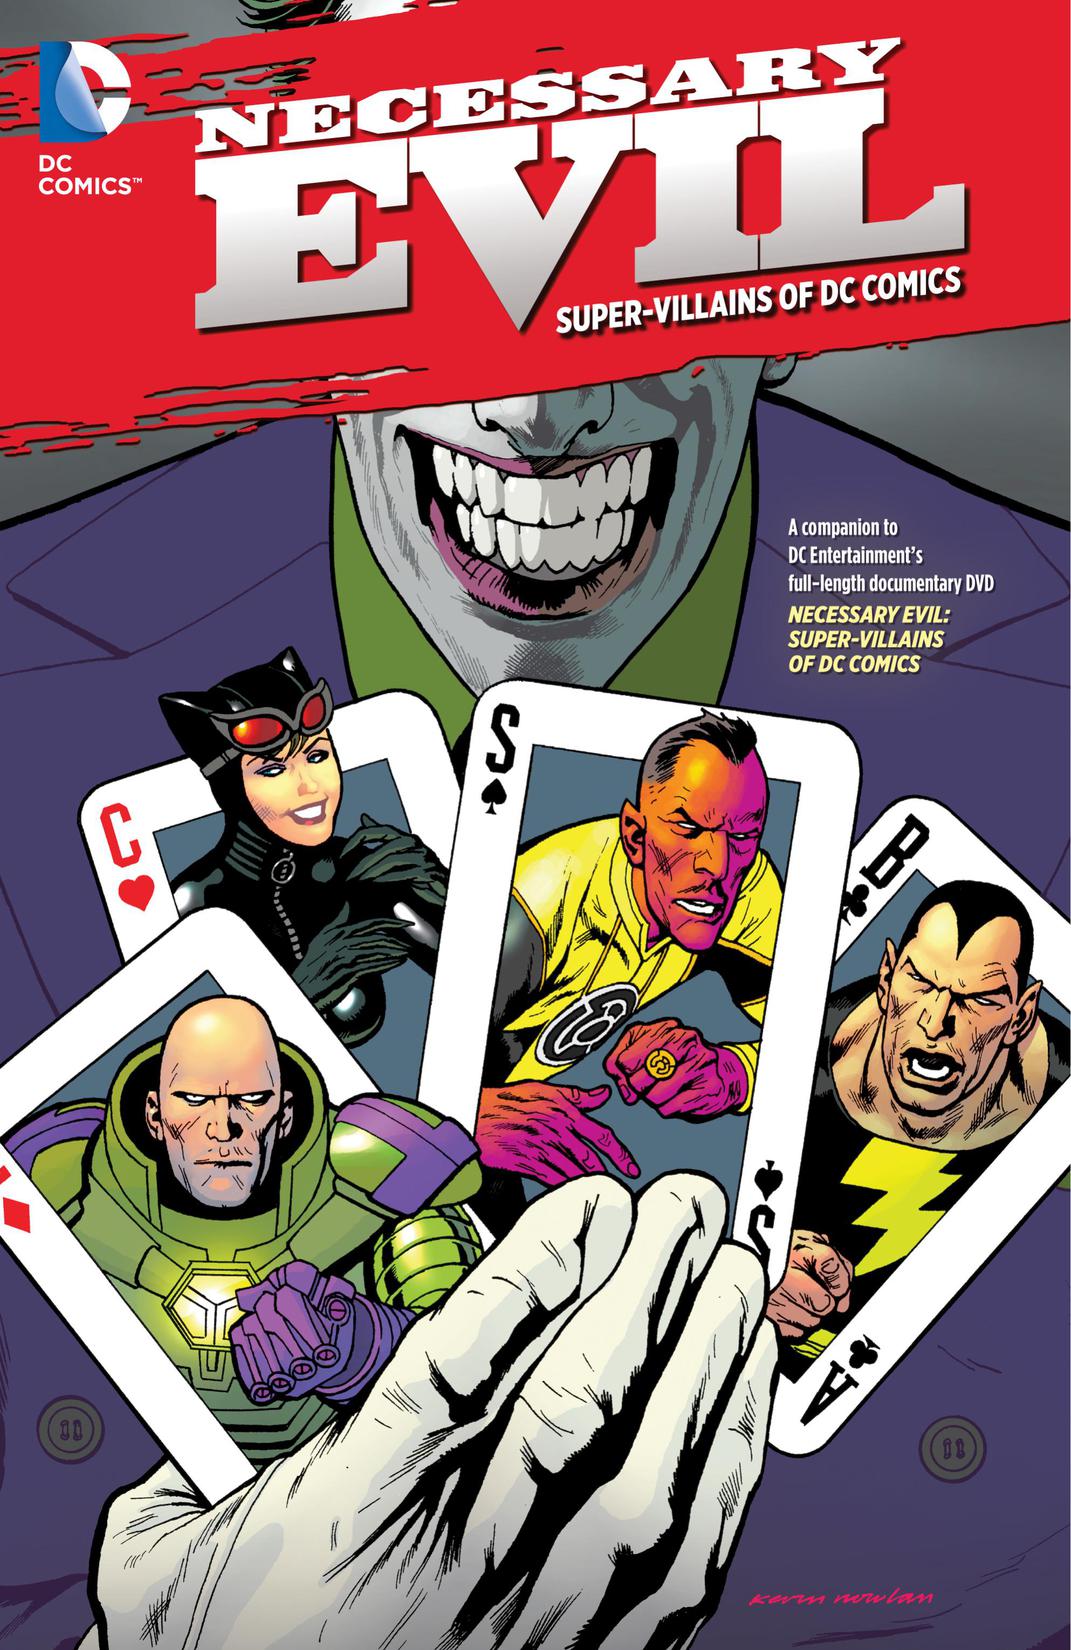 Necessary Evil: Super-Villains of DC Comics preview images